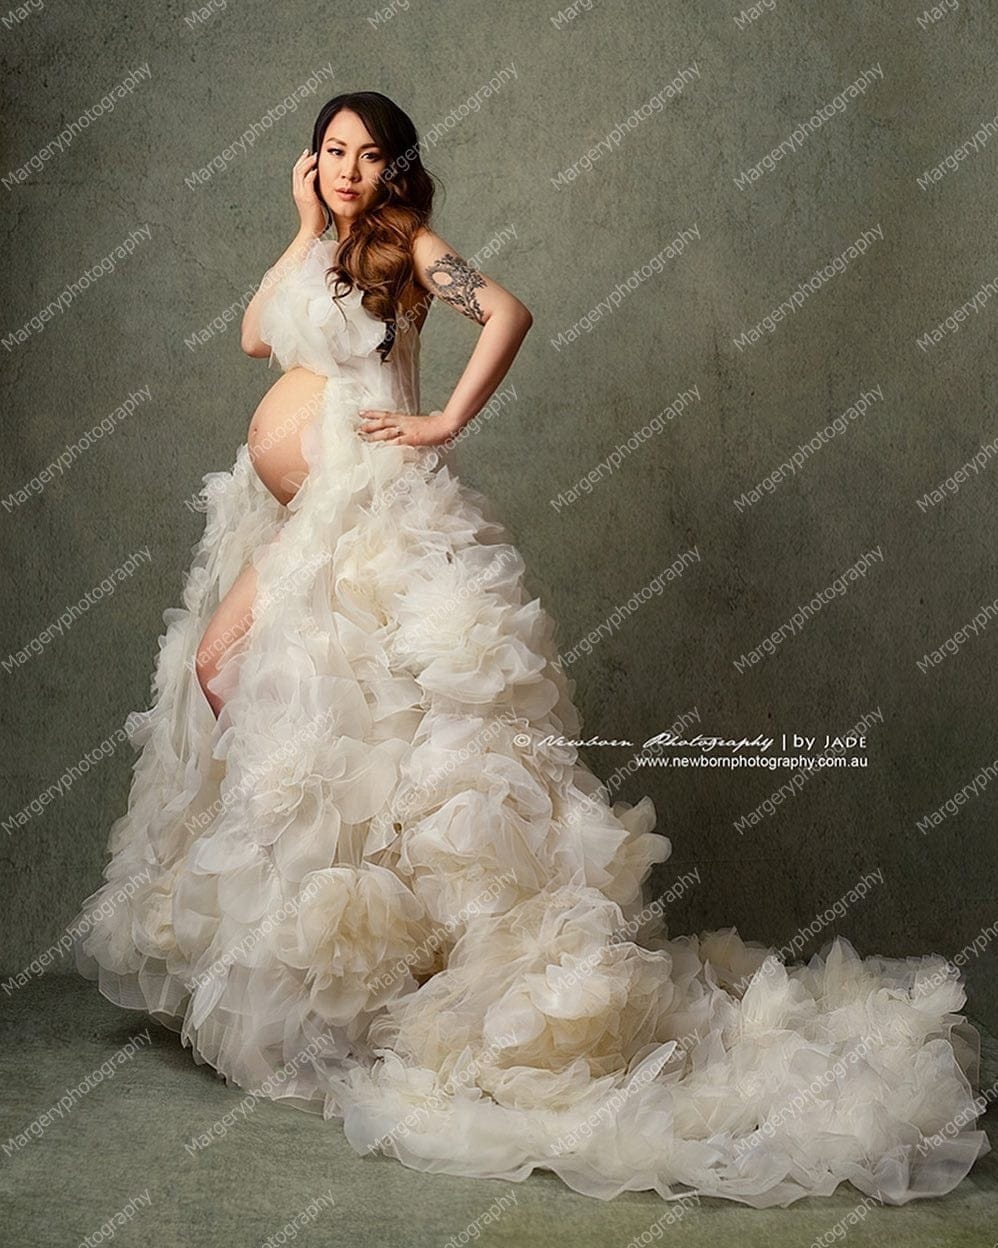 White Pregnancy Maternity Photoshoot Dress with Long Train | eBay